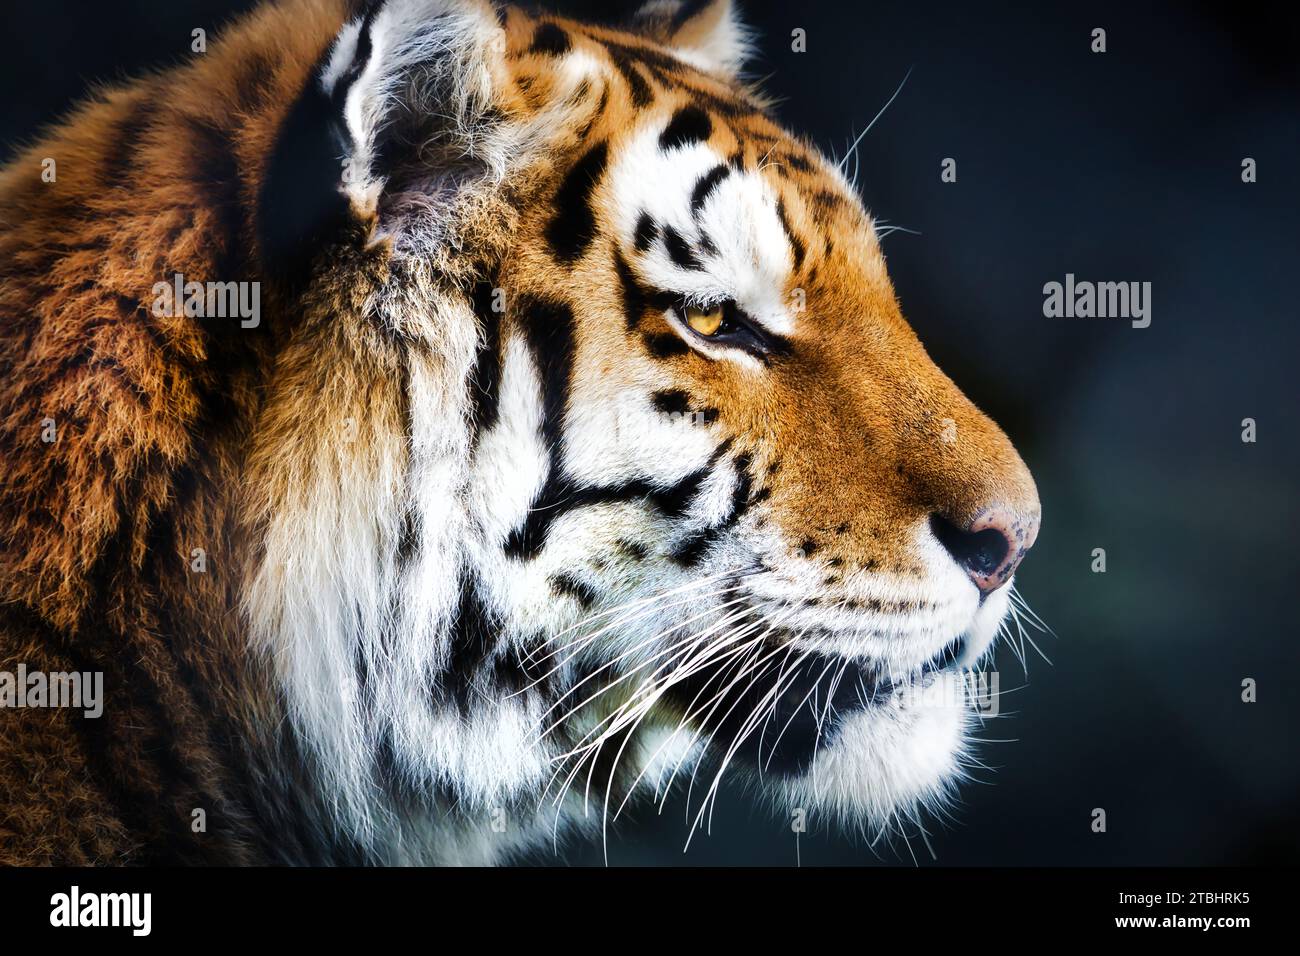 Endangered Amur Tiger head shot. Stock Photo